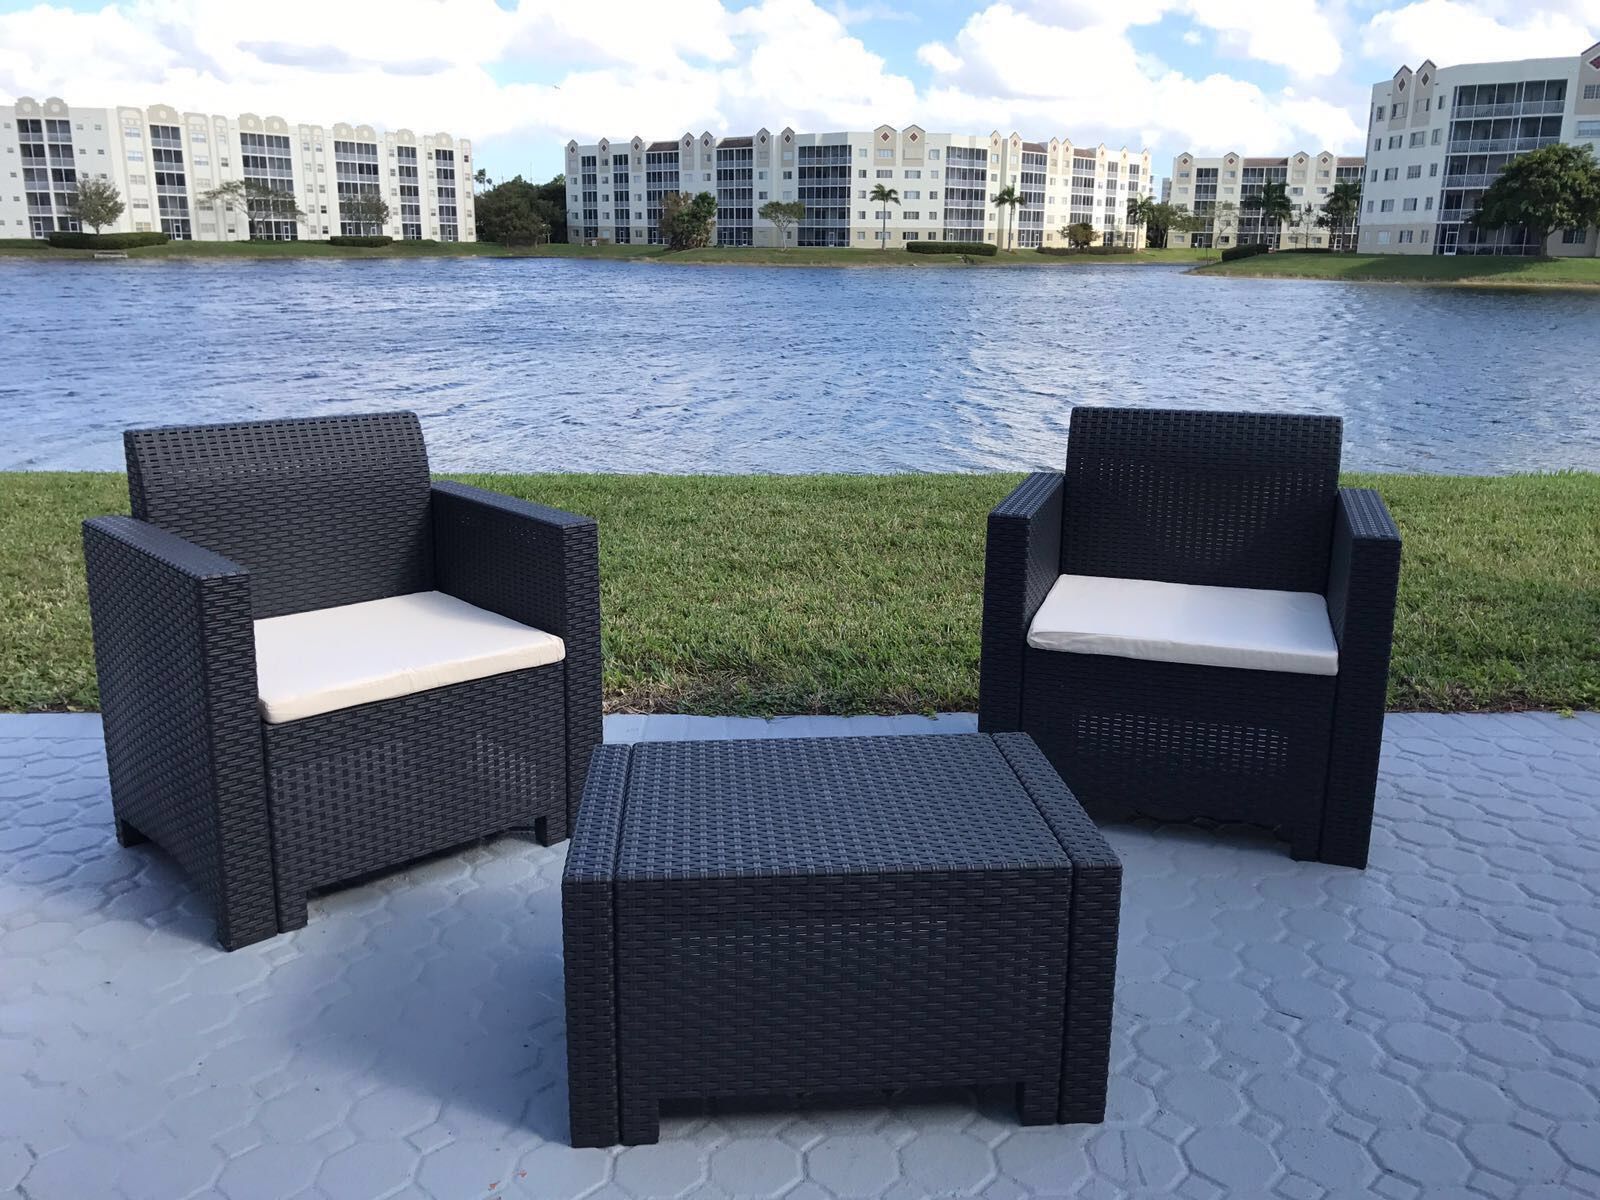 NEW Furniture / Patio furniture / outdoor furniture/ Muebles de patio /patio set /conversation set